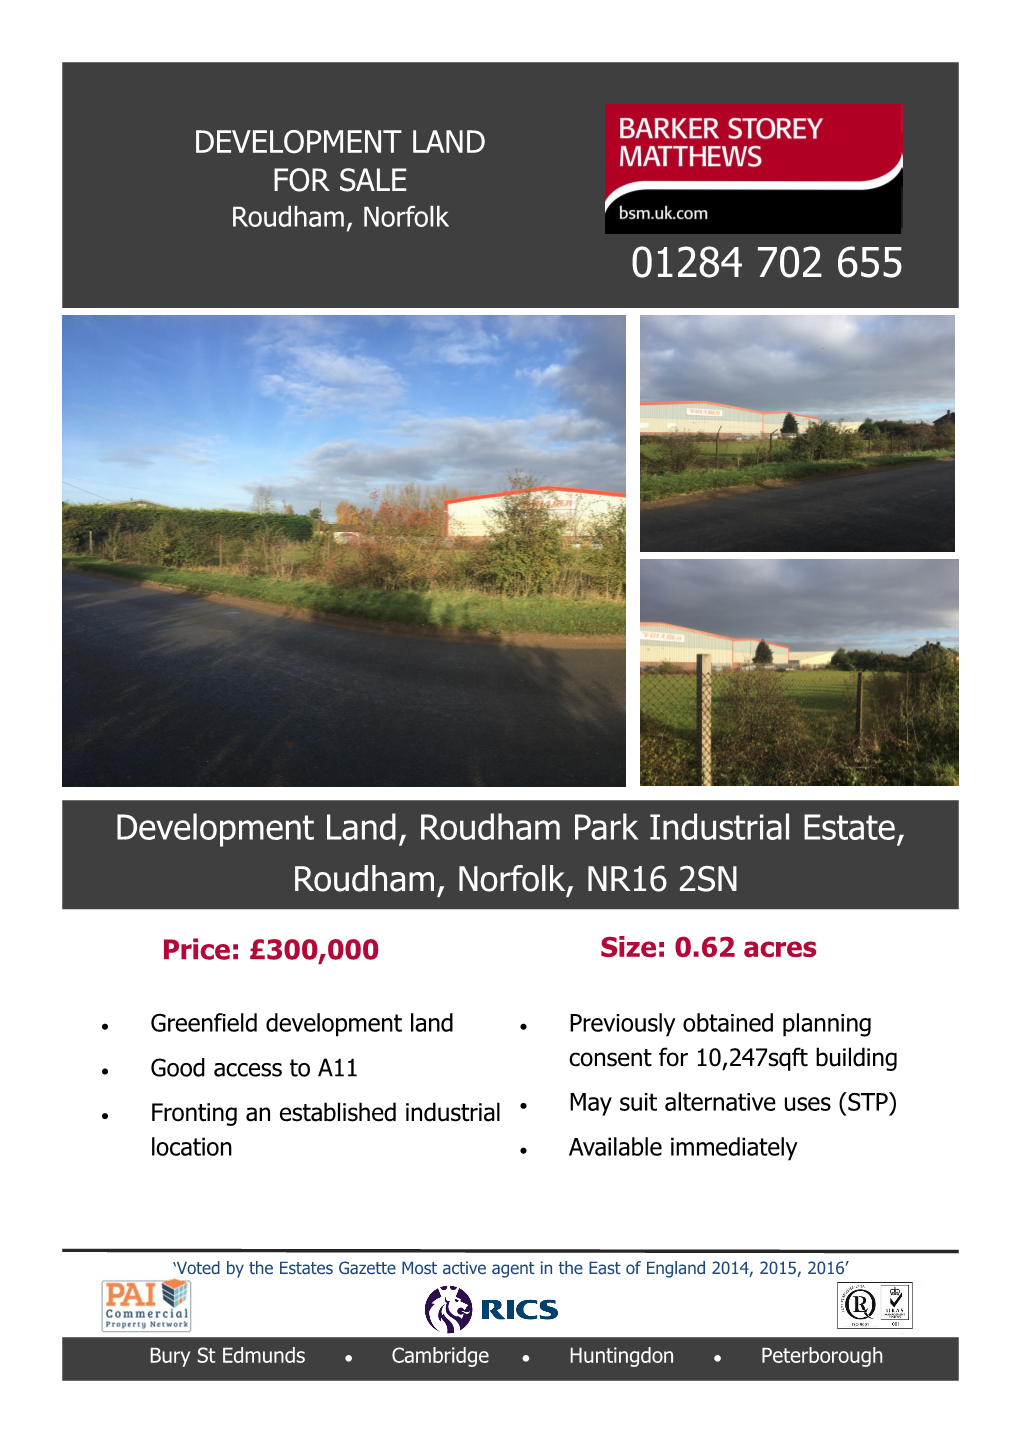 Development Land, Roudham Park Industrial Estate, Roudham, Norfolk, NR16 2SN